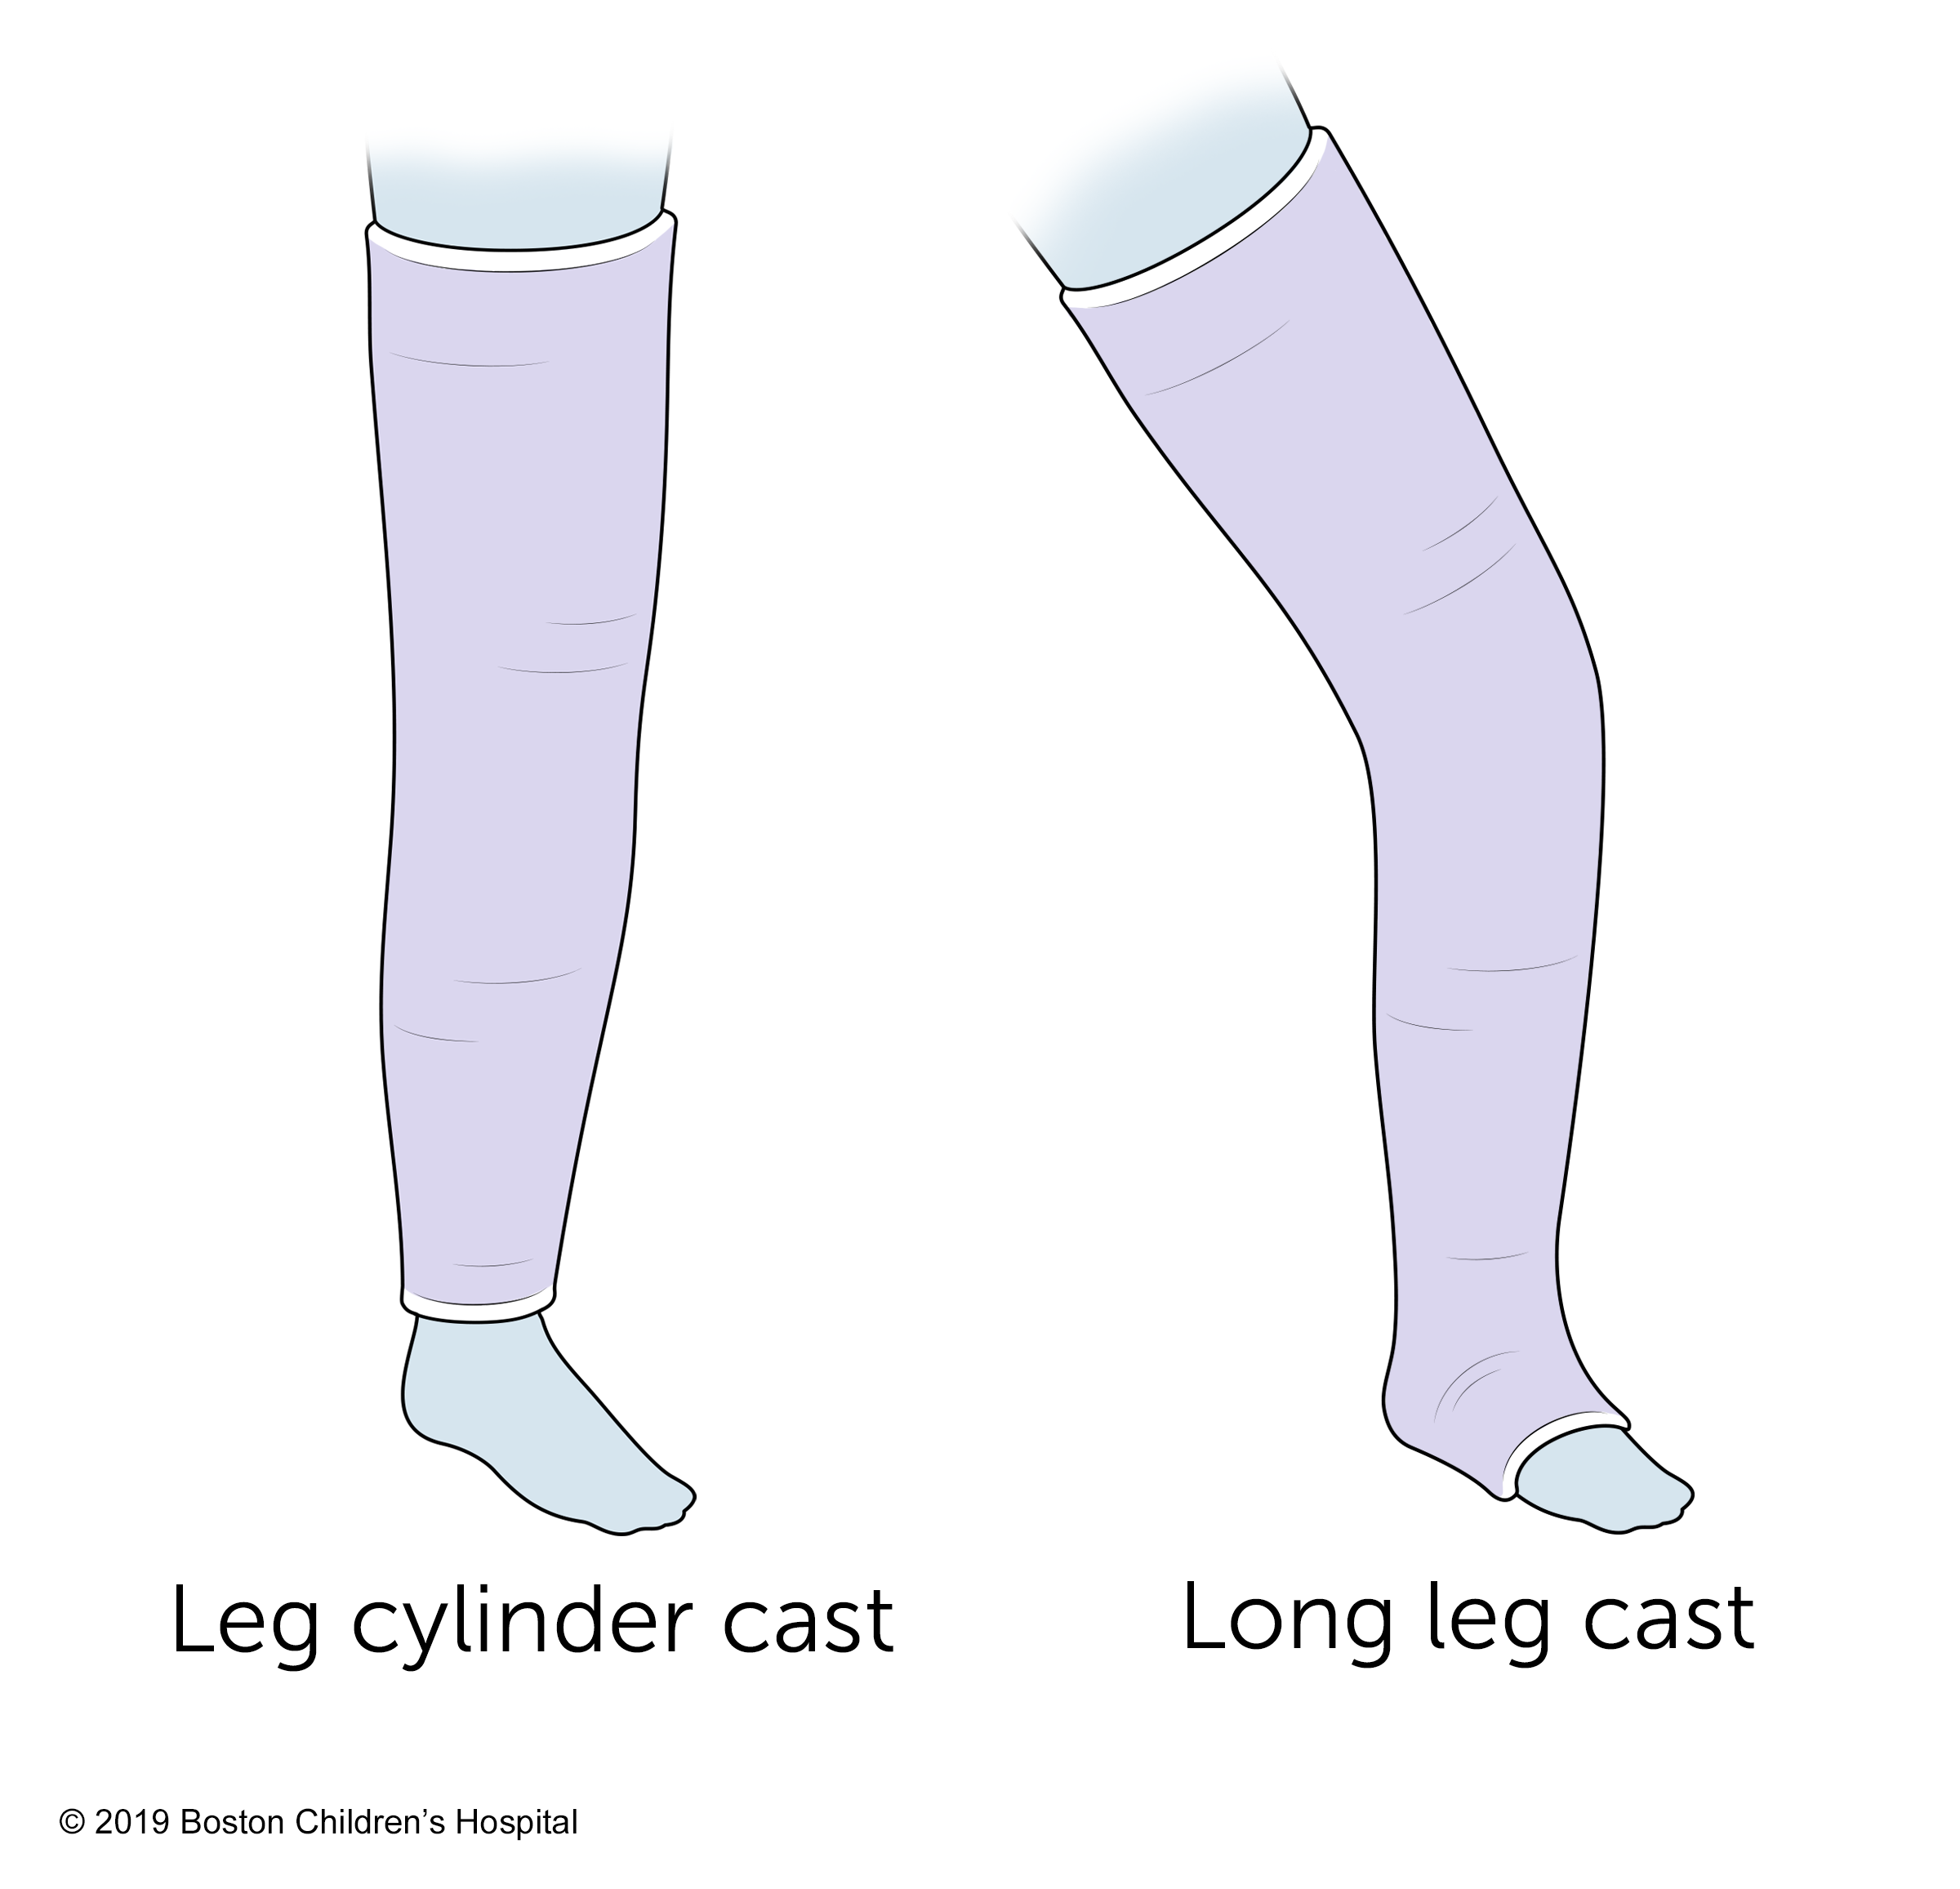 Leg cylinder and long leg casts